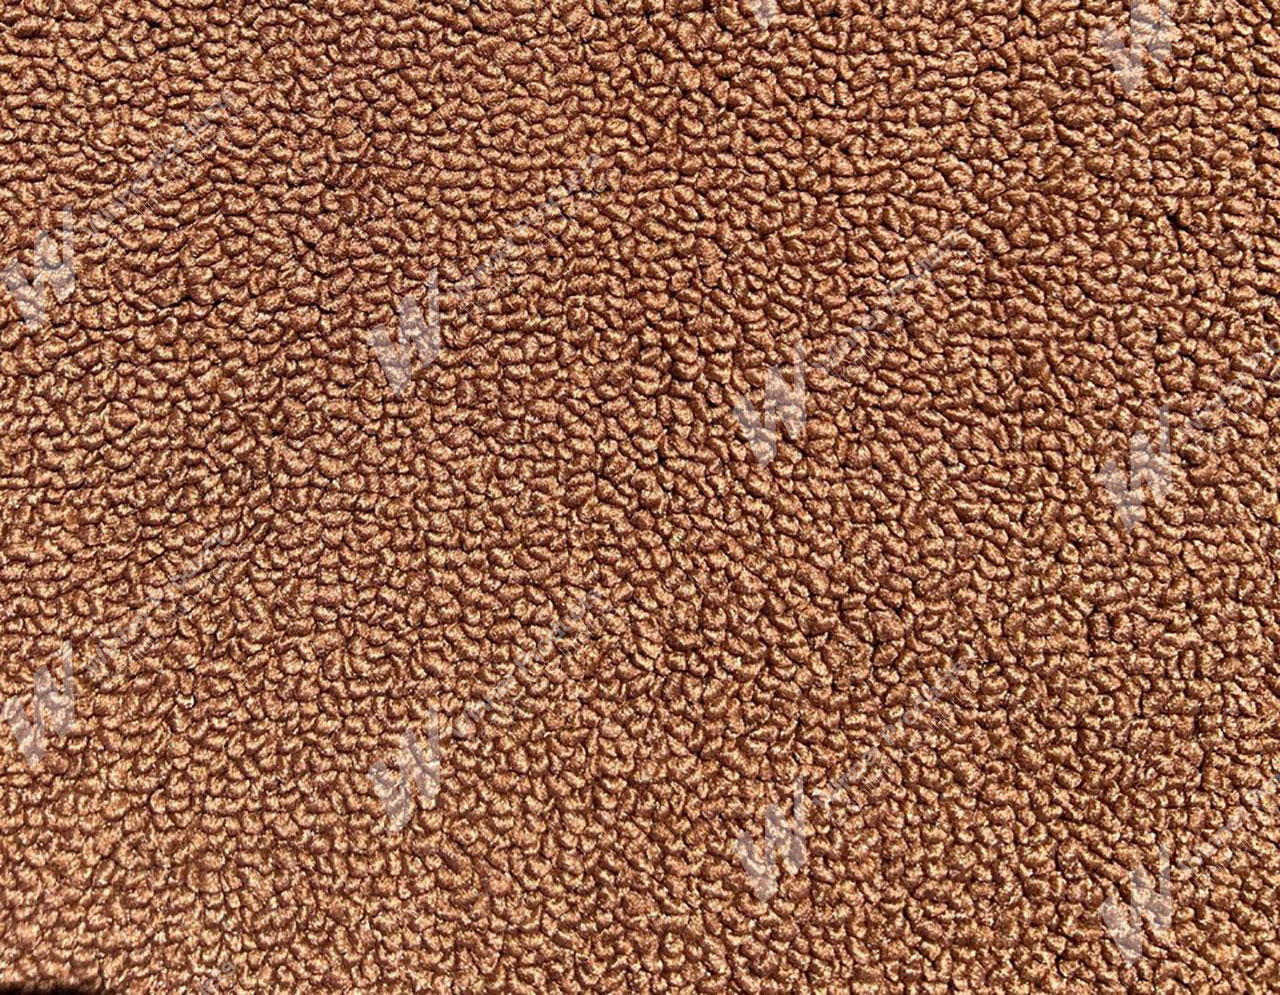 Holden Kingswood HJ Kingswood Panel Van 67X Tan & Cloth Carpet (Image 1 of 1)